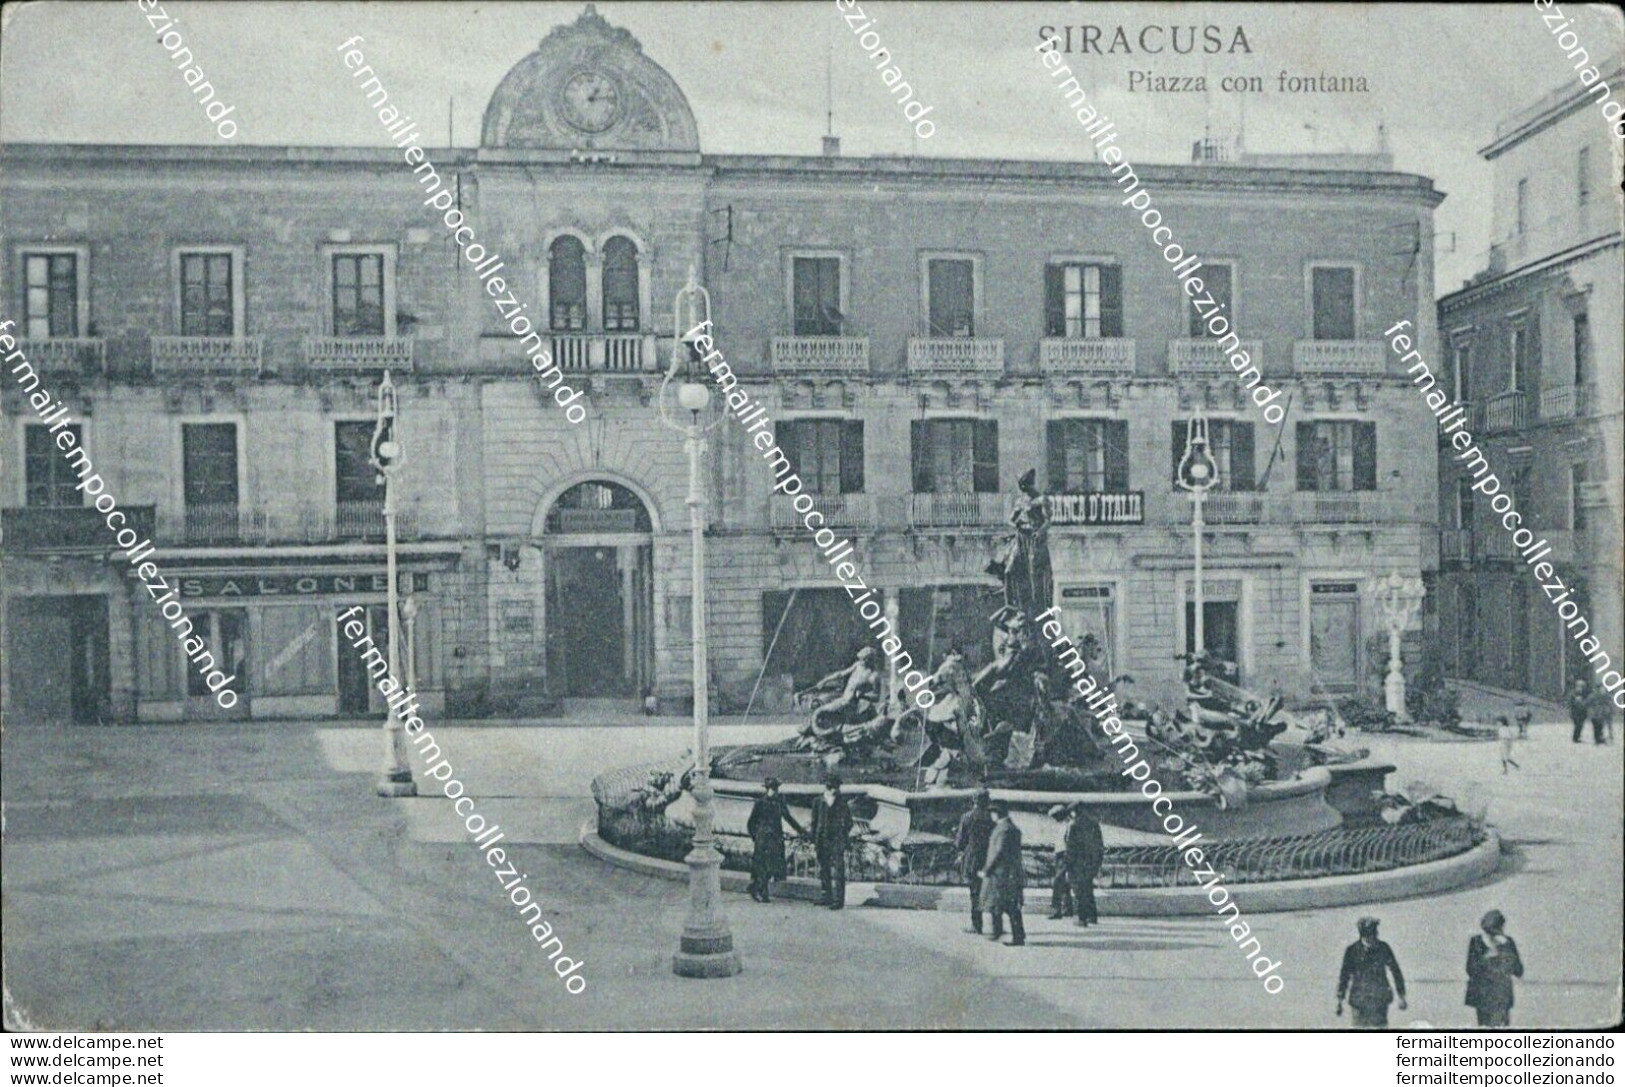 As594 Cartolina Siracusa Citta' Piazza Con Fontana - Siracusa